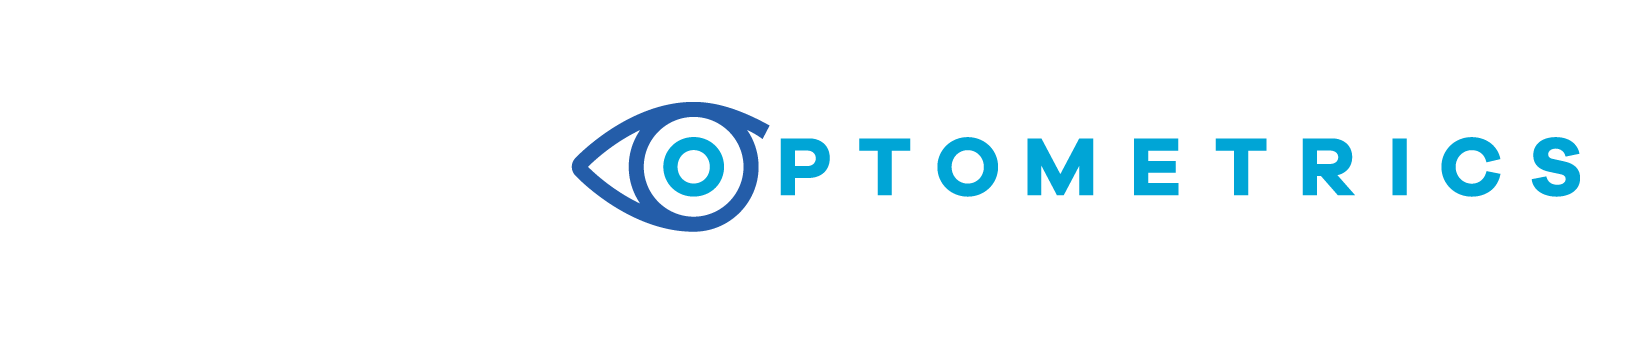 DigitalOptometrics - Logo